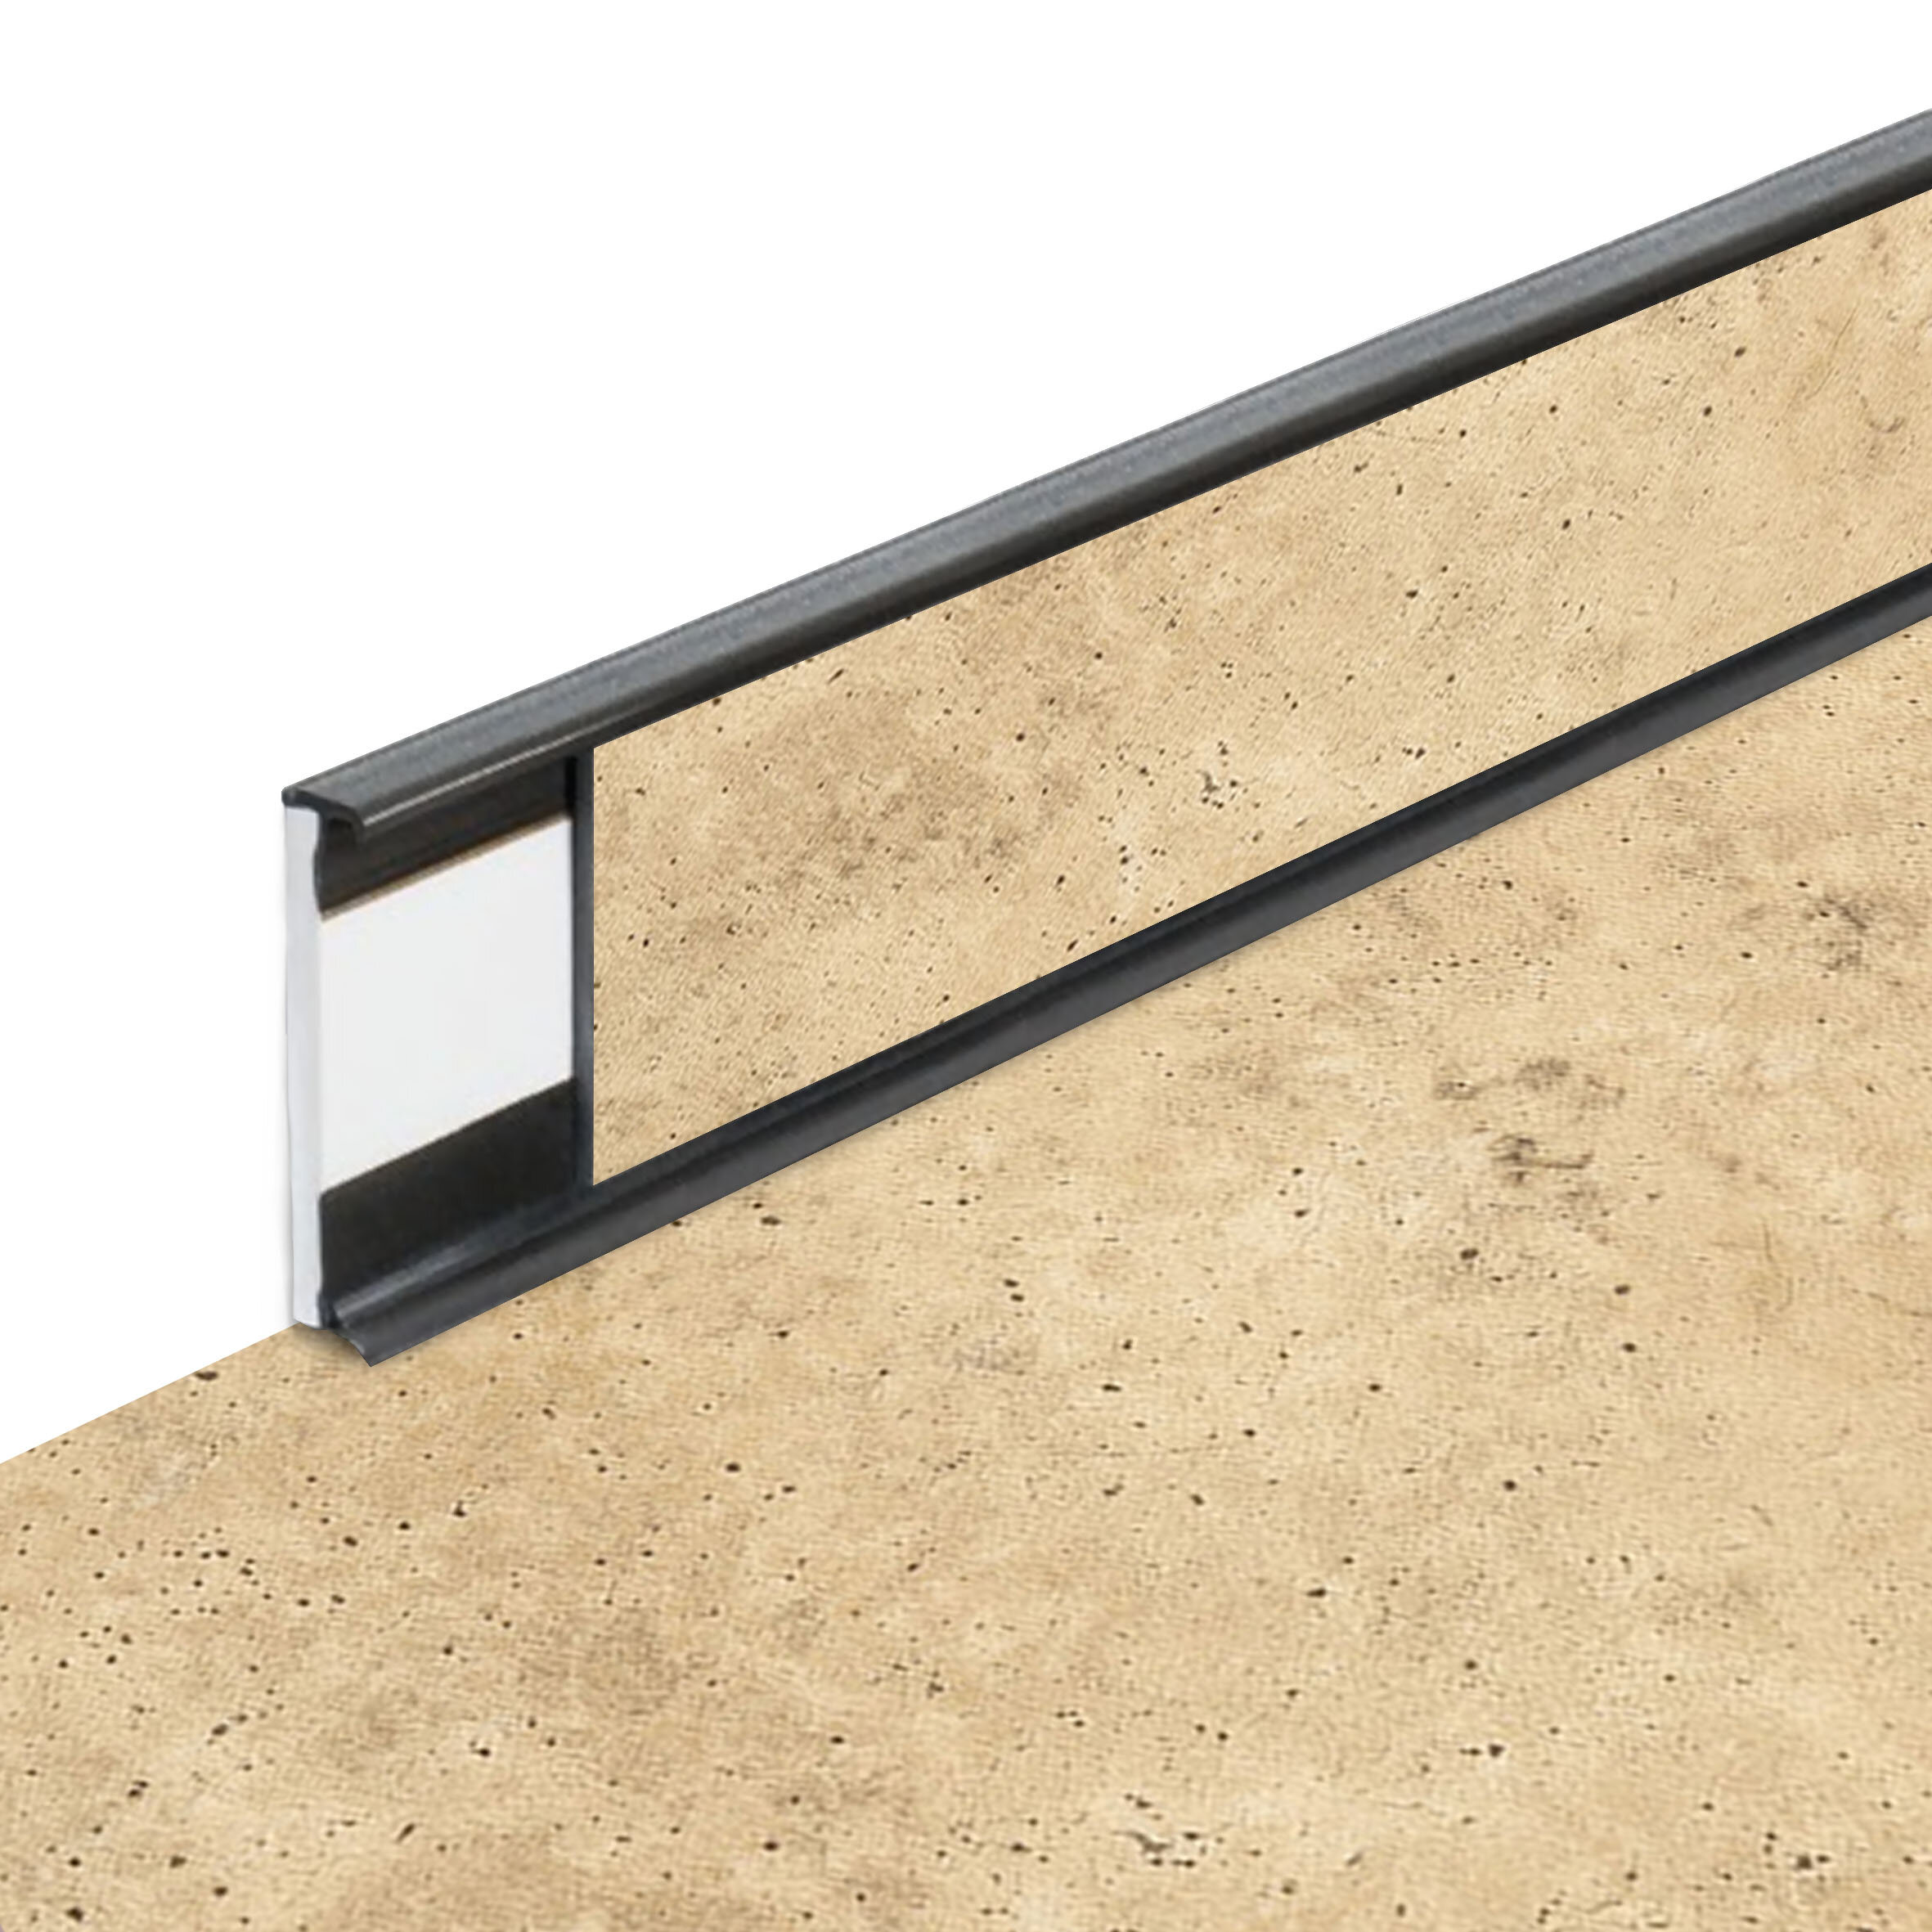 PVC vinylová soklová podlahová lišta Fortelock Business Tornes Saturn C011 Graphite - dĺžka 200 cm, výška 5,8 cm, hrúbka 1,2 cm